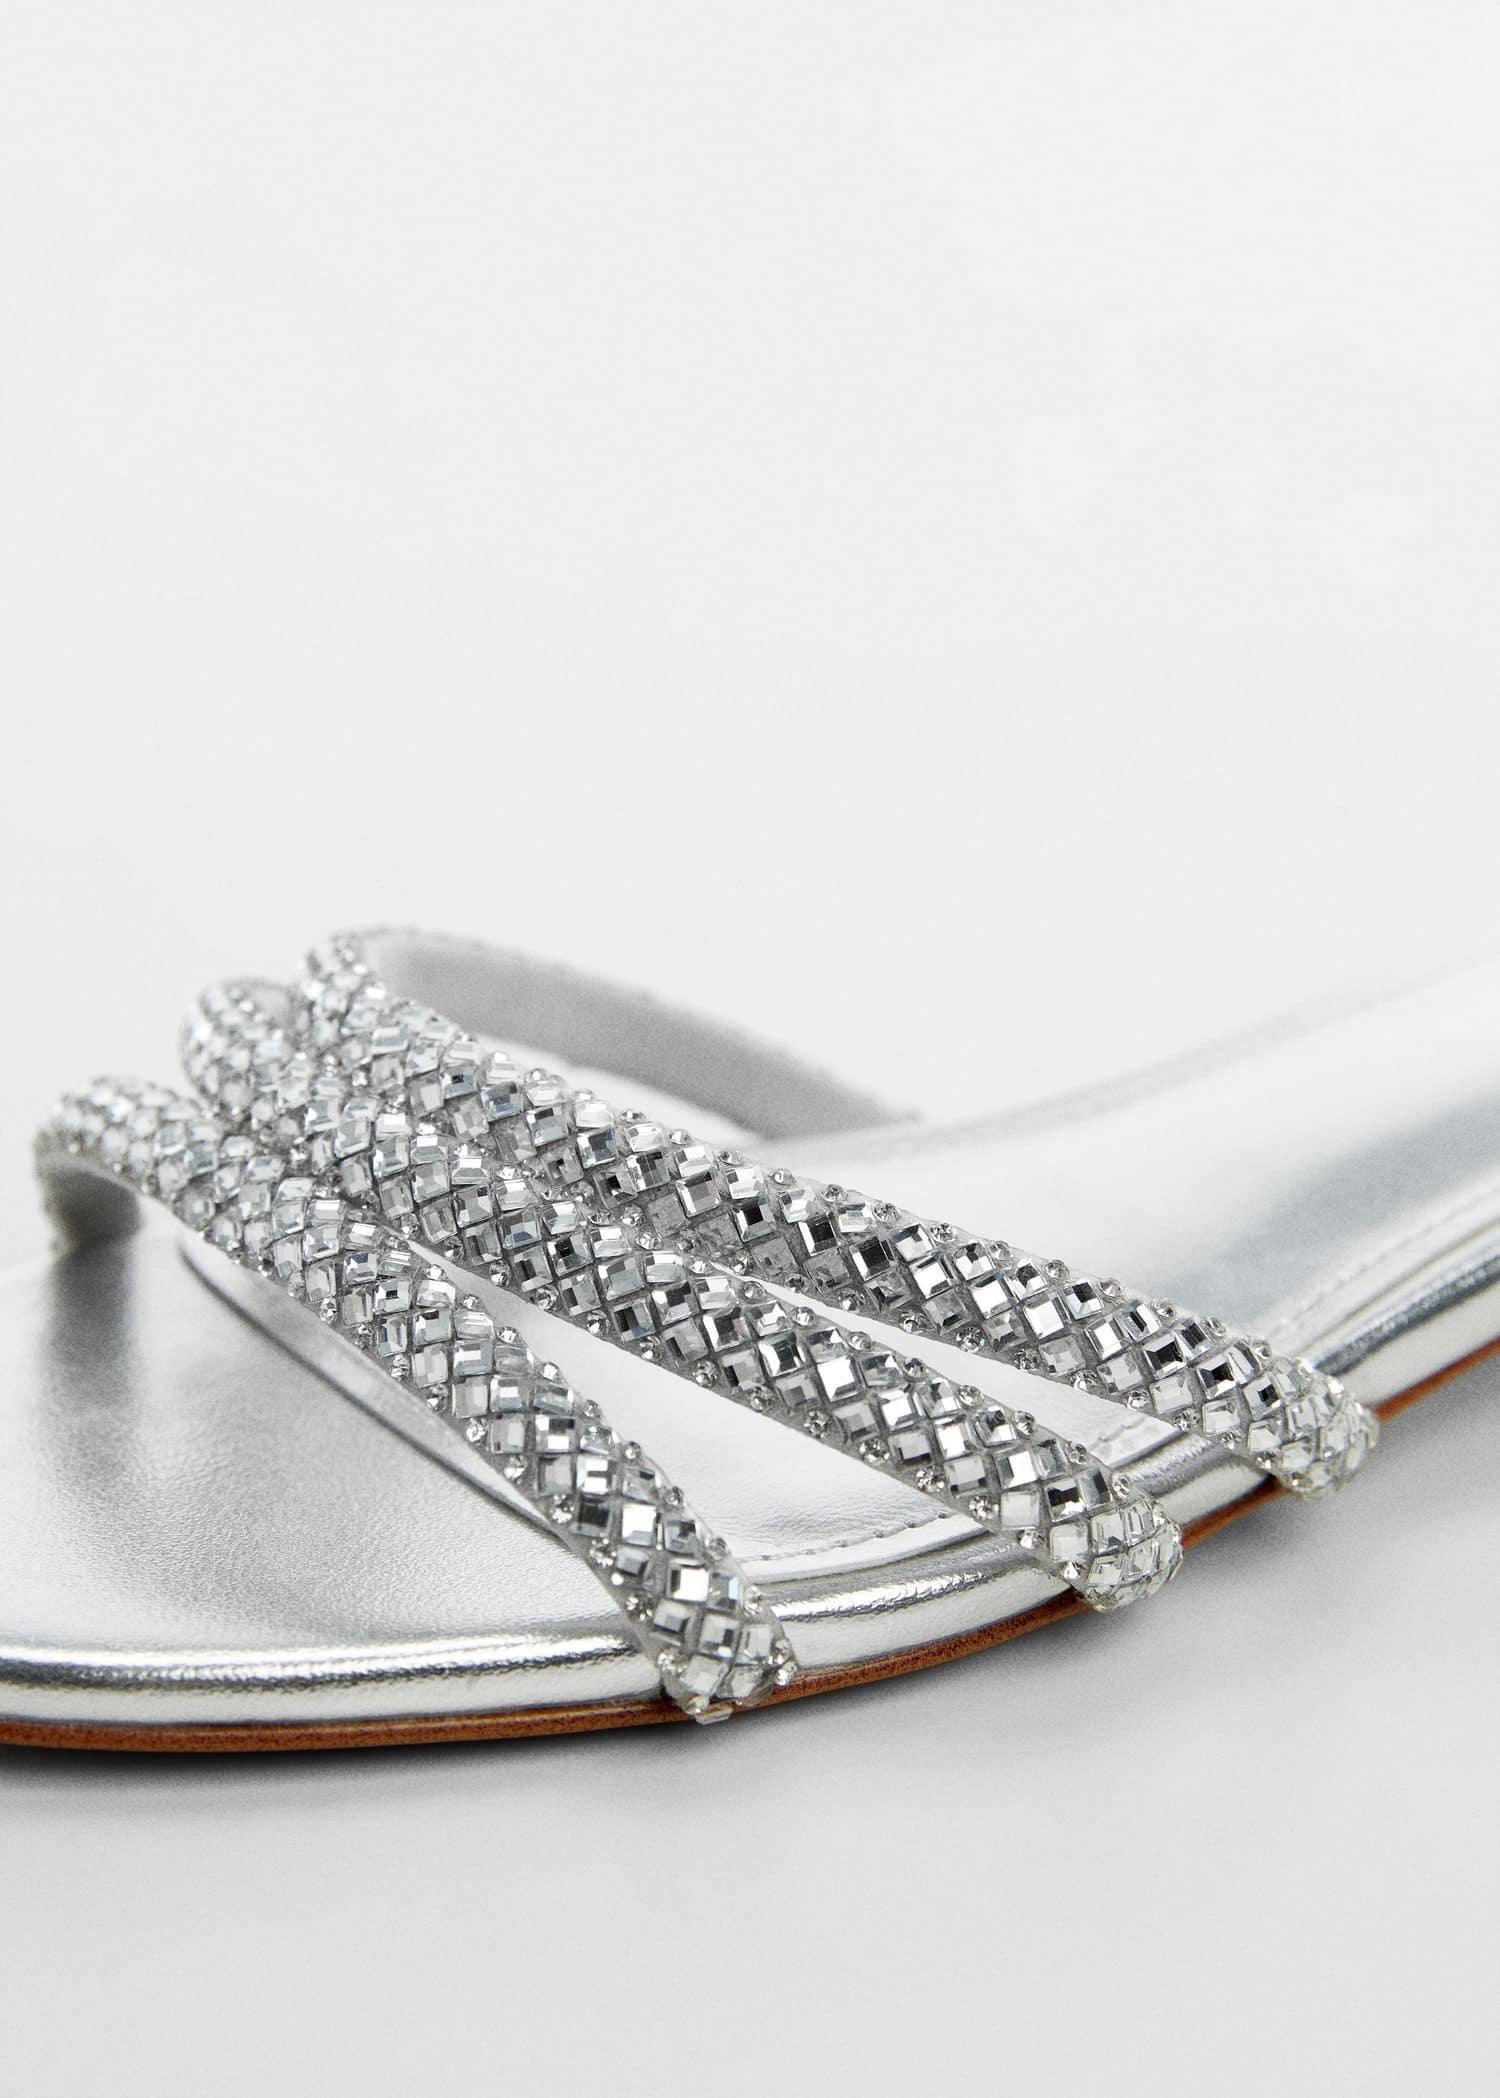 Mango - Silver Glitter Straps Sandal